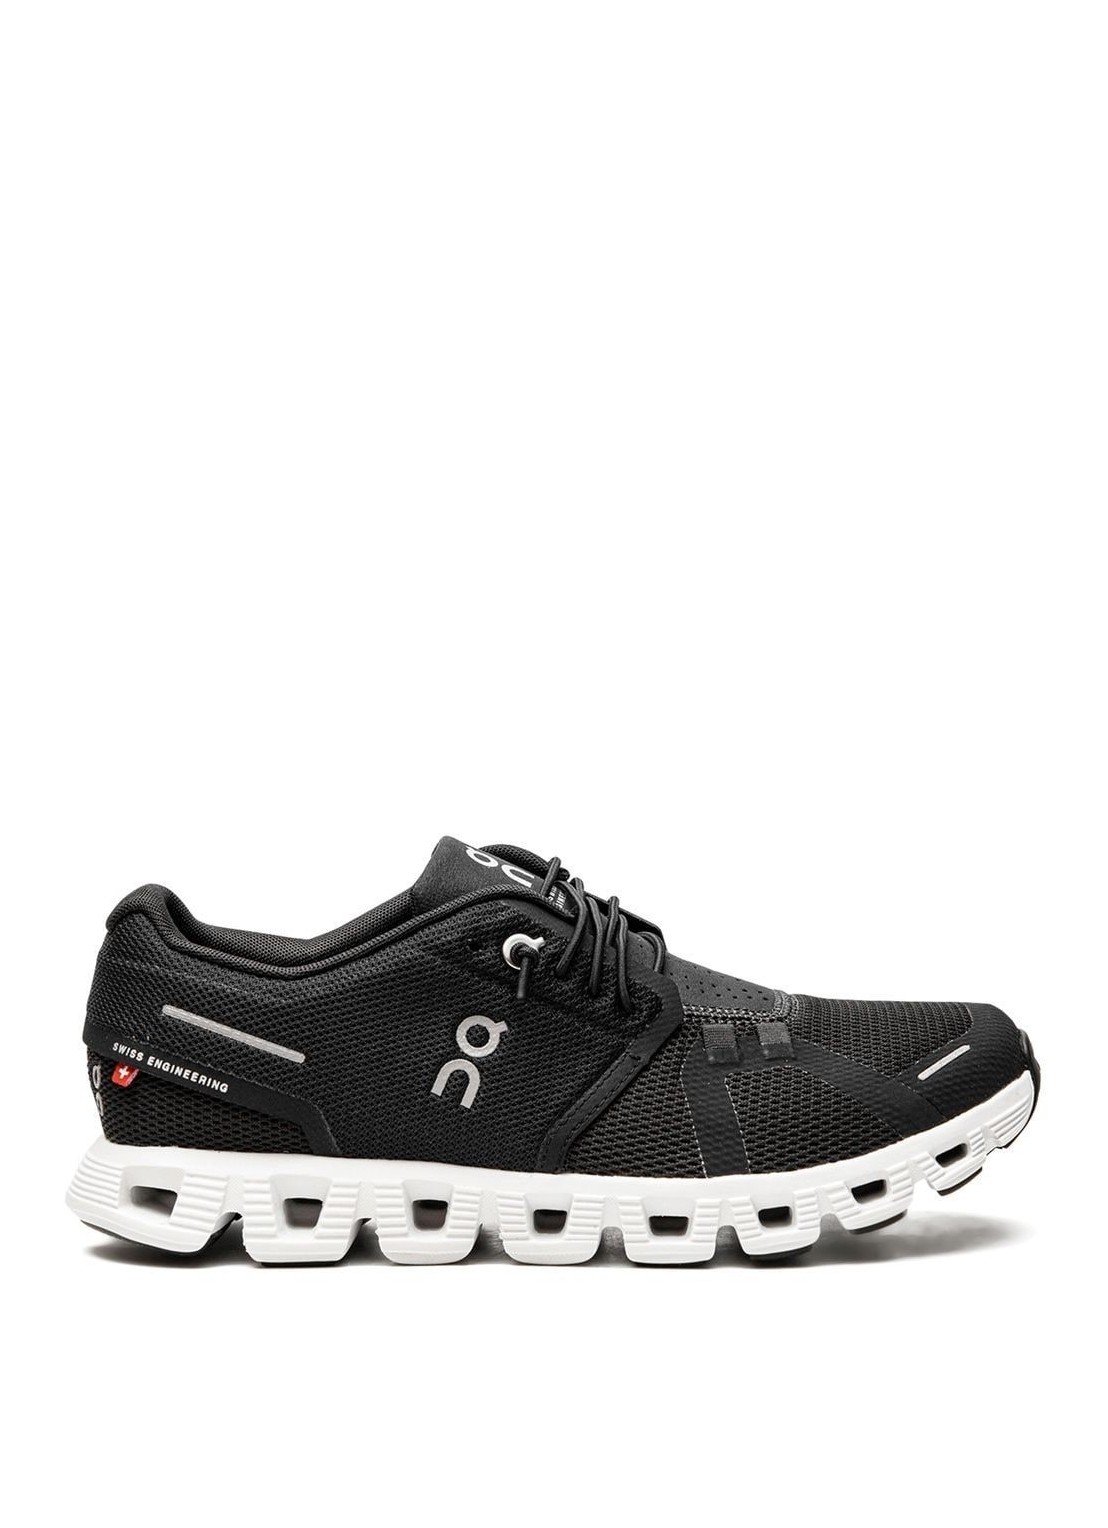 Sneaker on running sneaker woman cloud 5 5998904 black white talla negro
 